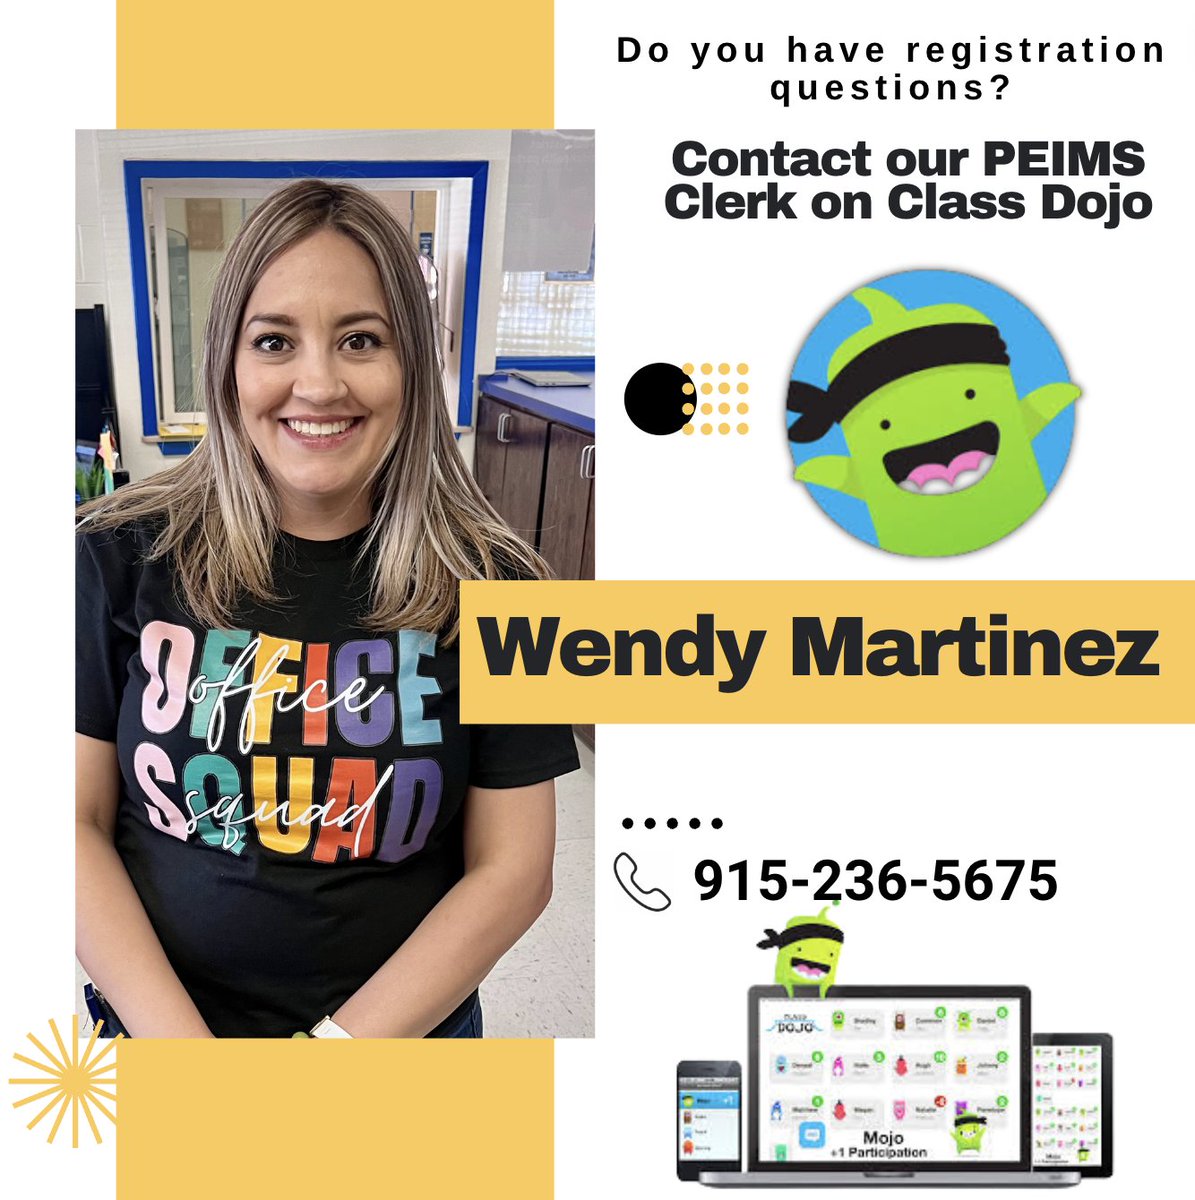 Do you have questions regarding registration? You can now contact Mrs. Wendy Martinez, our PEIMS clerk through Class Dojo. Tiene alguna pregunta sobre inscripciones? Contacte a Mrs. Wendy Martinez en Class Dojo.